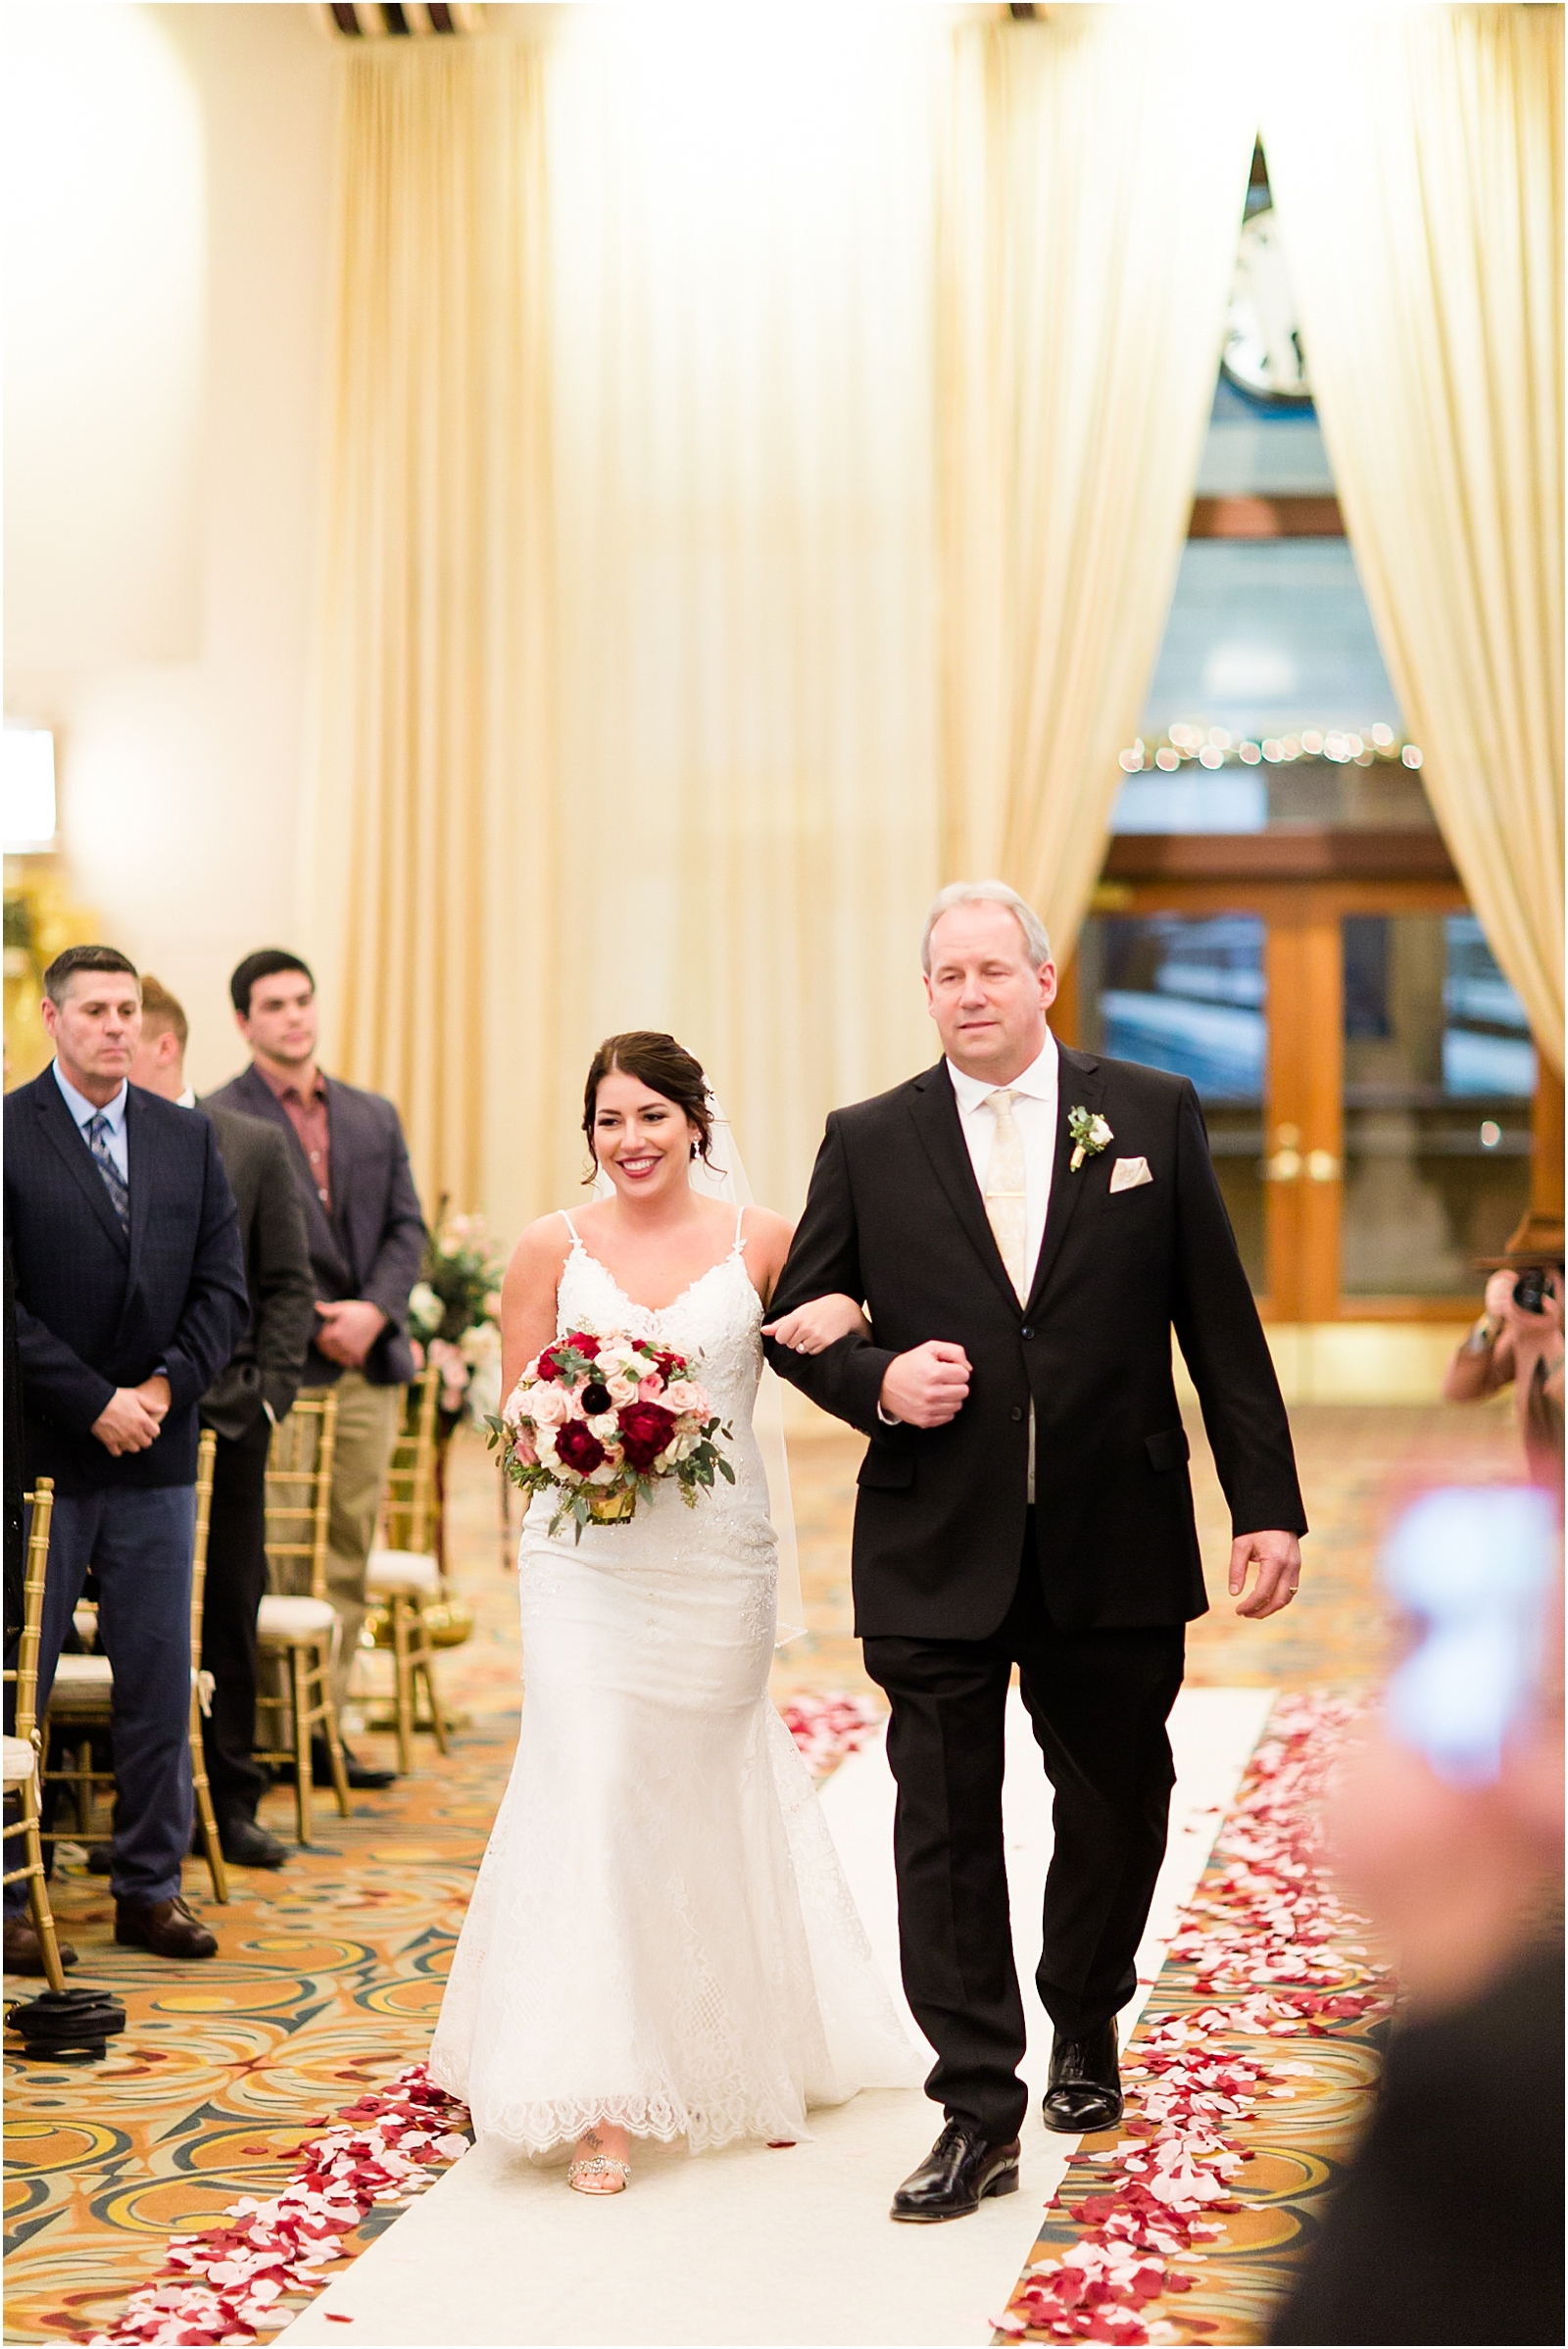 Tori and Jacson | Evansville Wedding Photographer | Bret and Brandie Photography0062.jpg